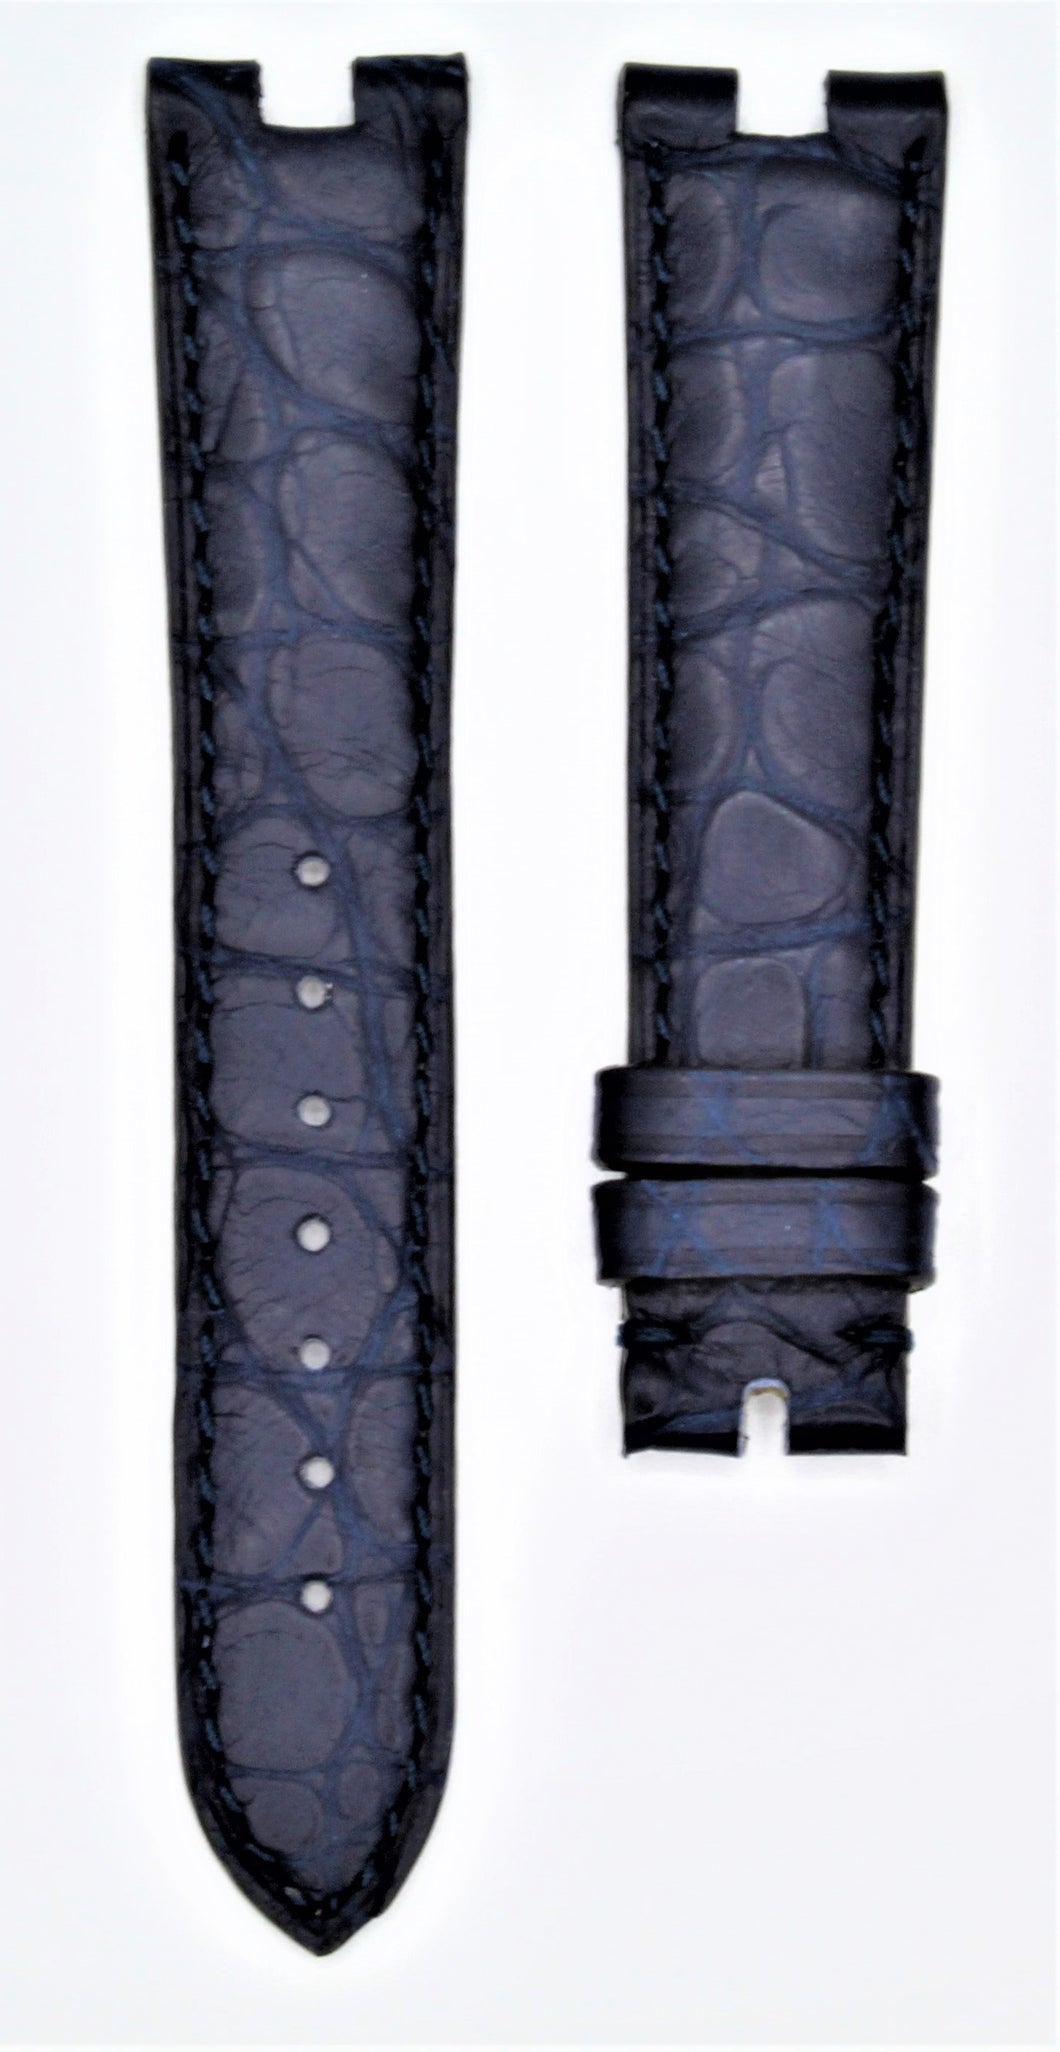 Crocodile leather strap